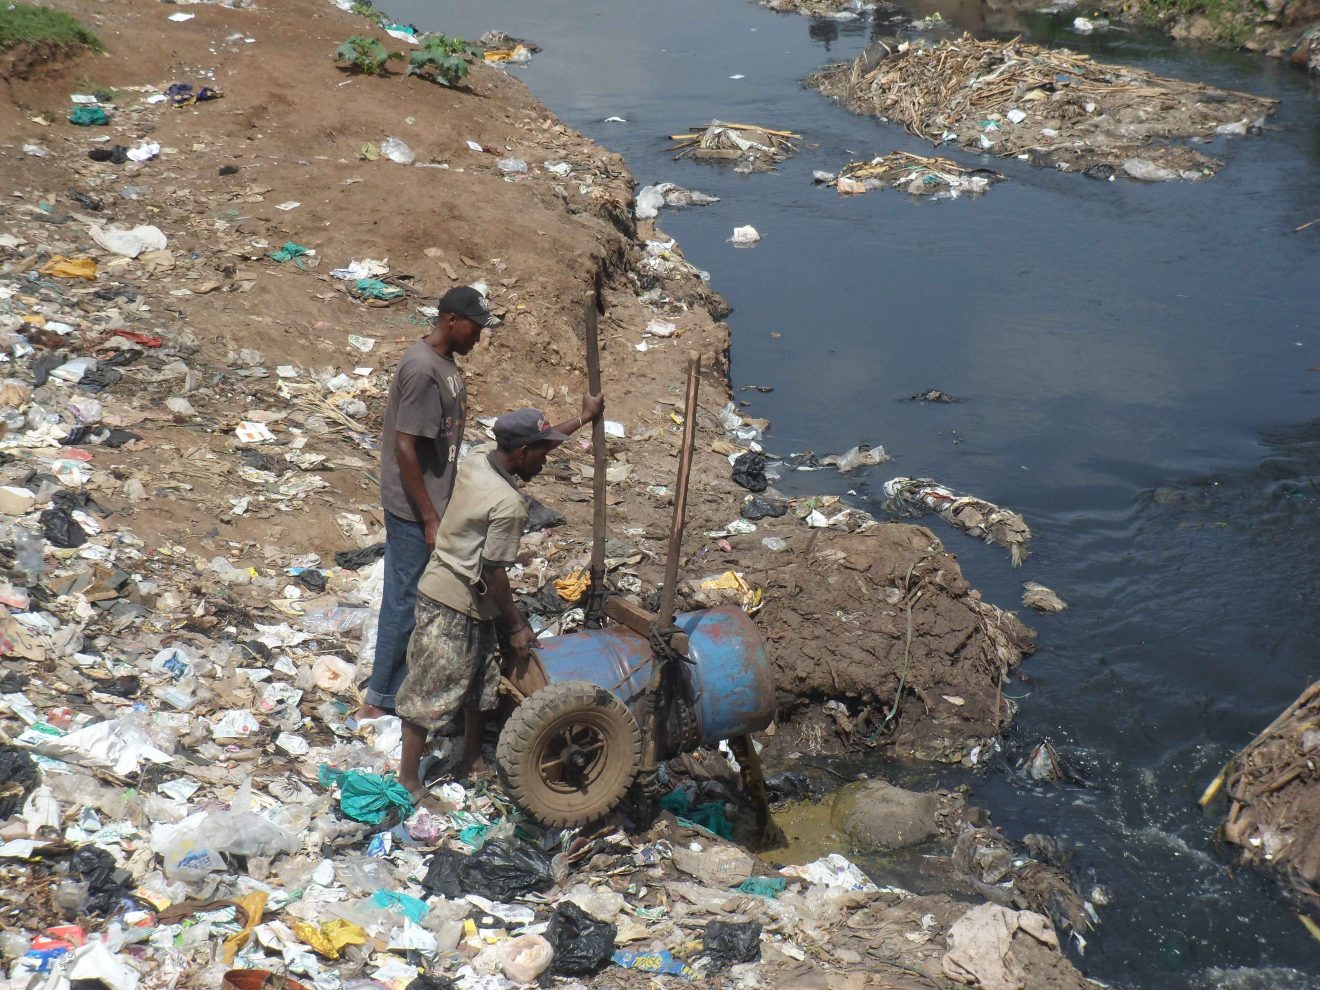 Two men pour a barrel of sludge into a trash-strewn waterway.